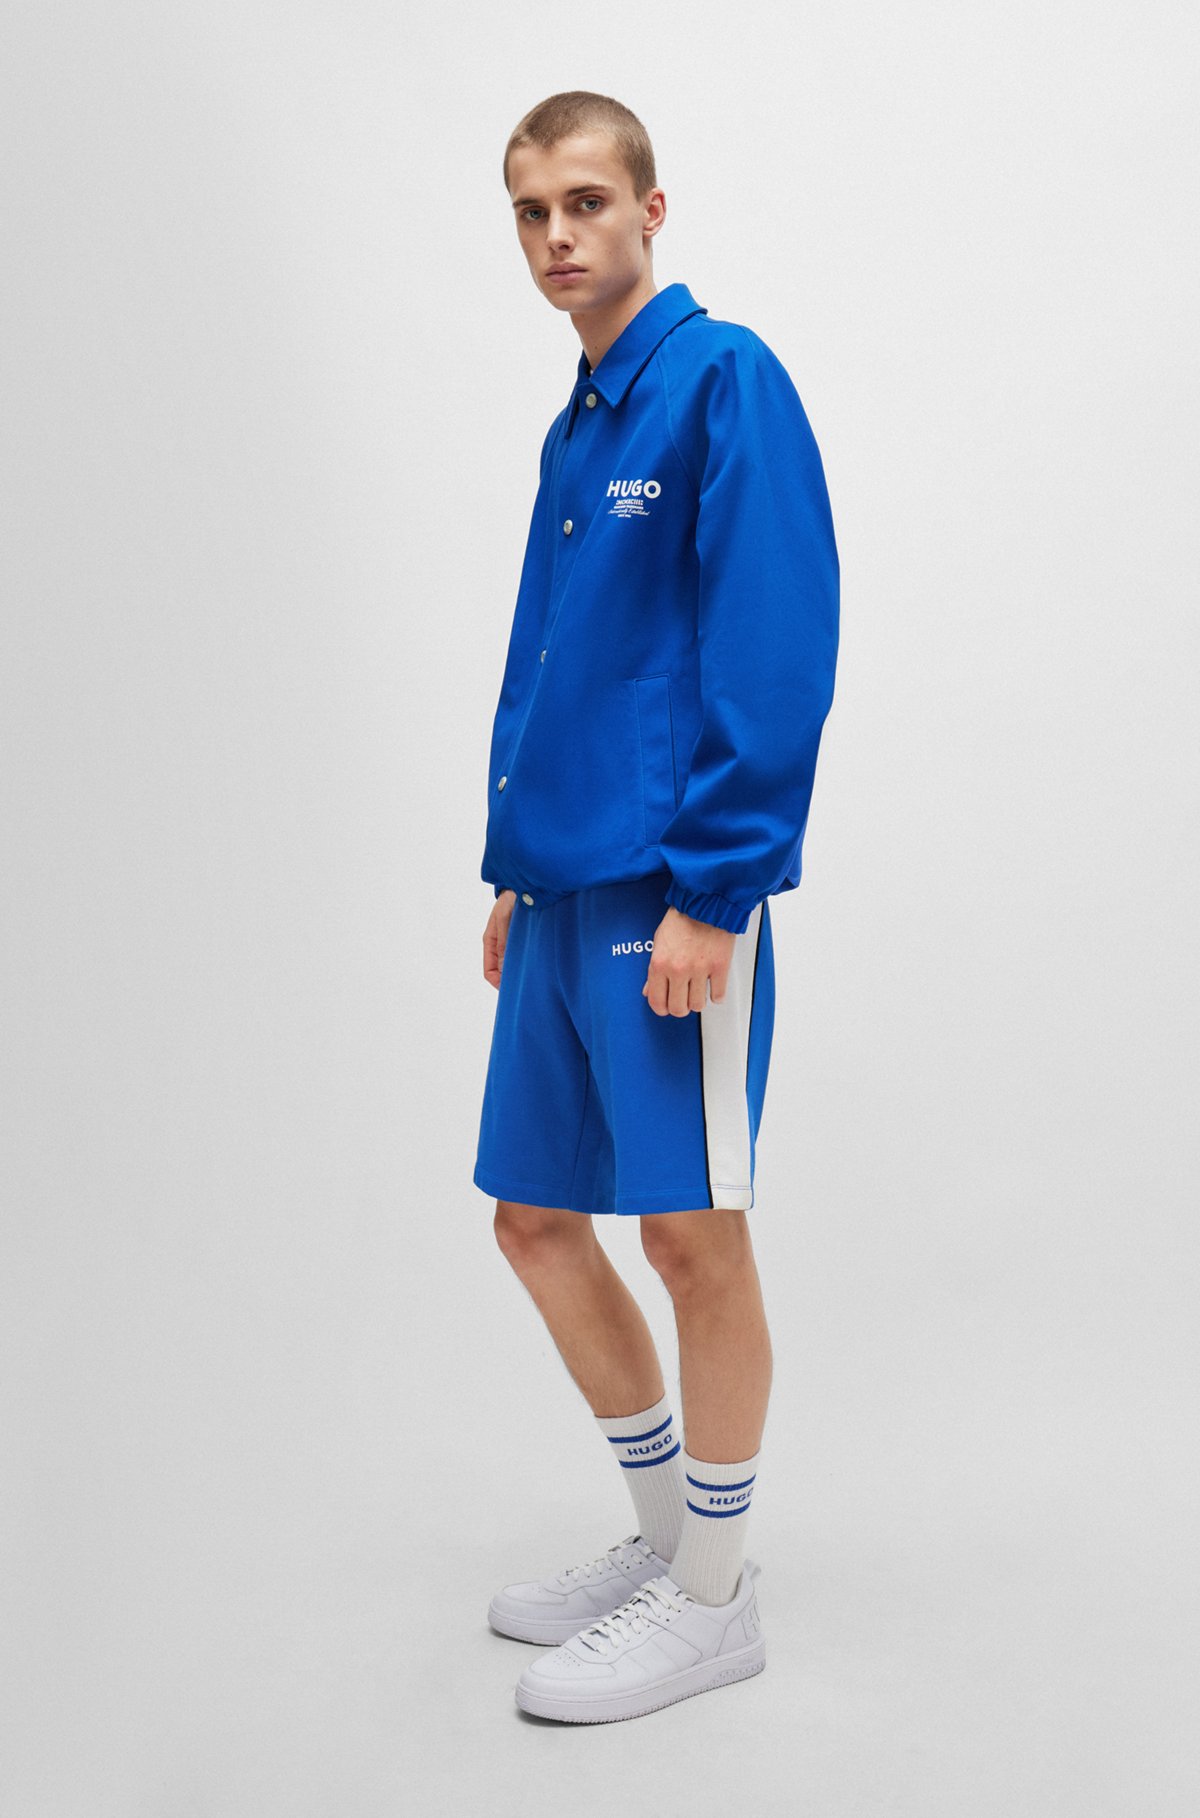 HUGO - Slim-fit coach jacket with logo prints